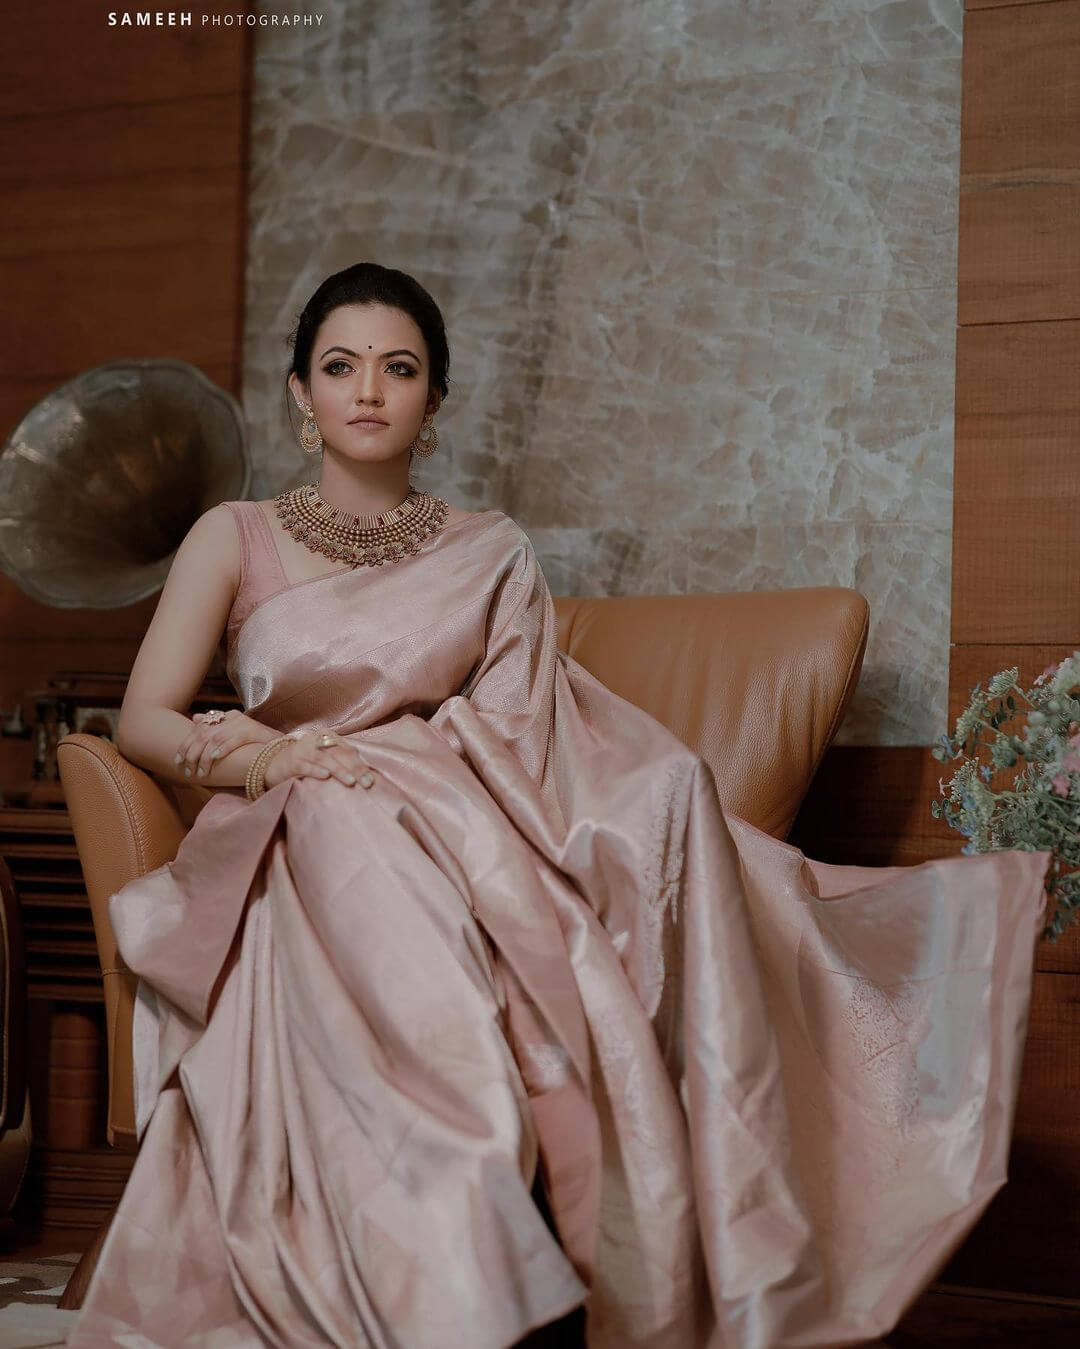 Aparna Das Classy & Elegant look In Beige Kanjeevaram Silk Saree With Sleeveless Blouse & Beautiful Gold Necklace - Festive Outfits & Looks